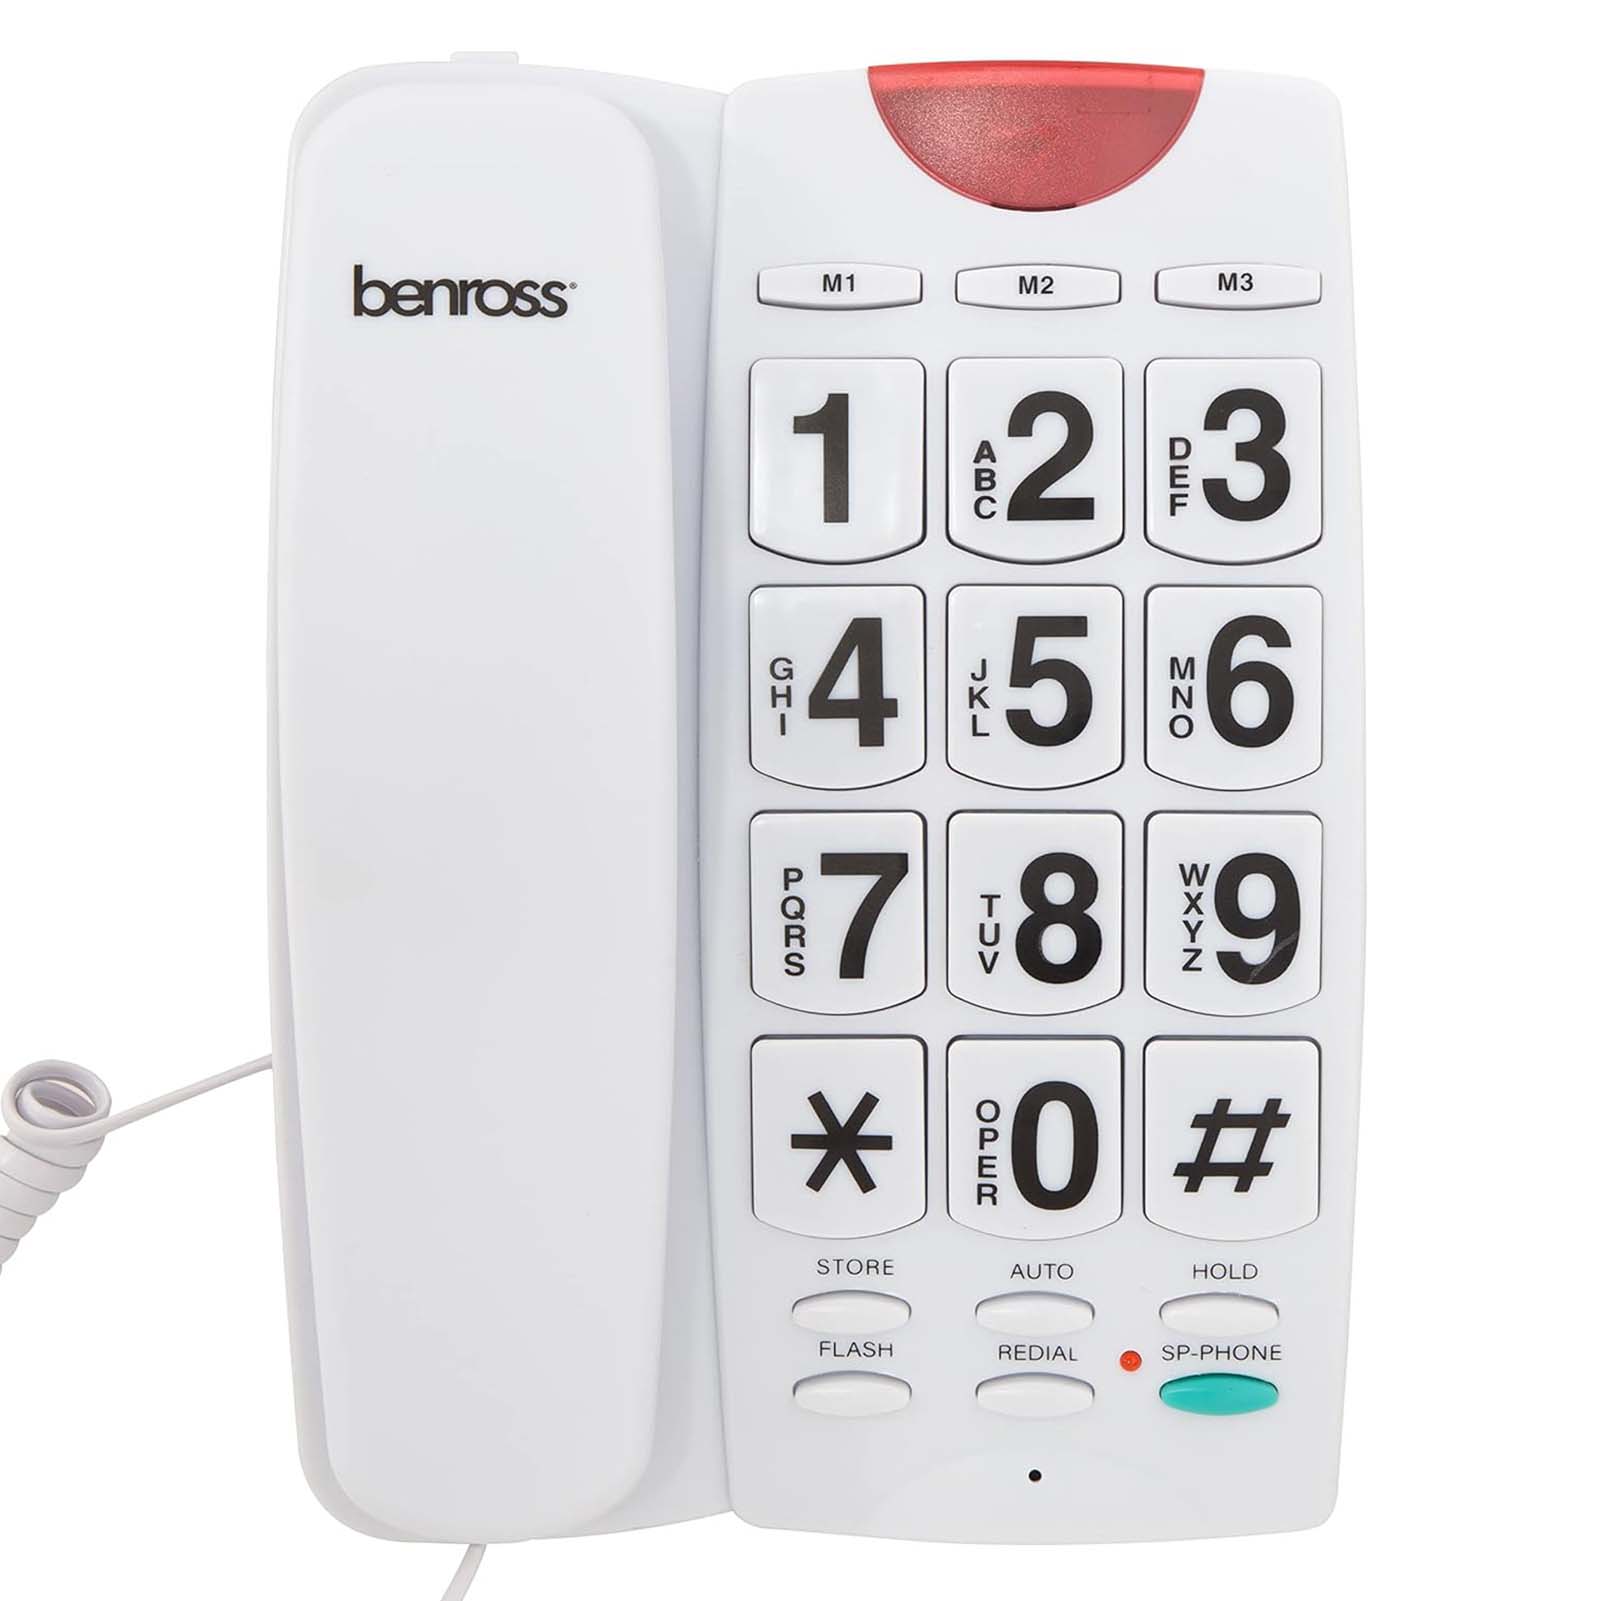 Benross Telephone Big Button - White 44580